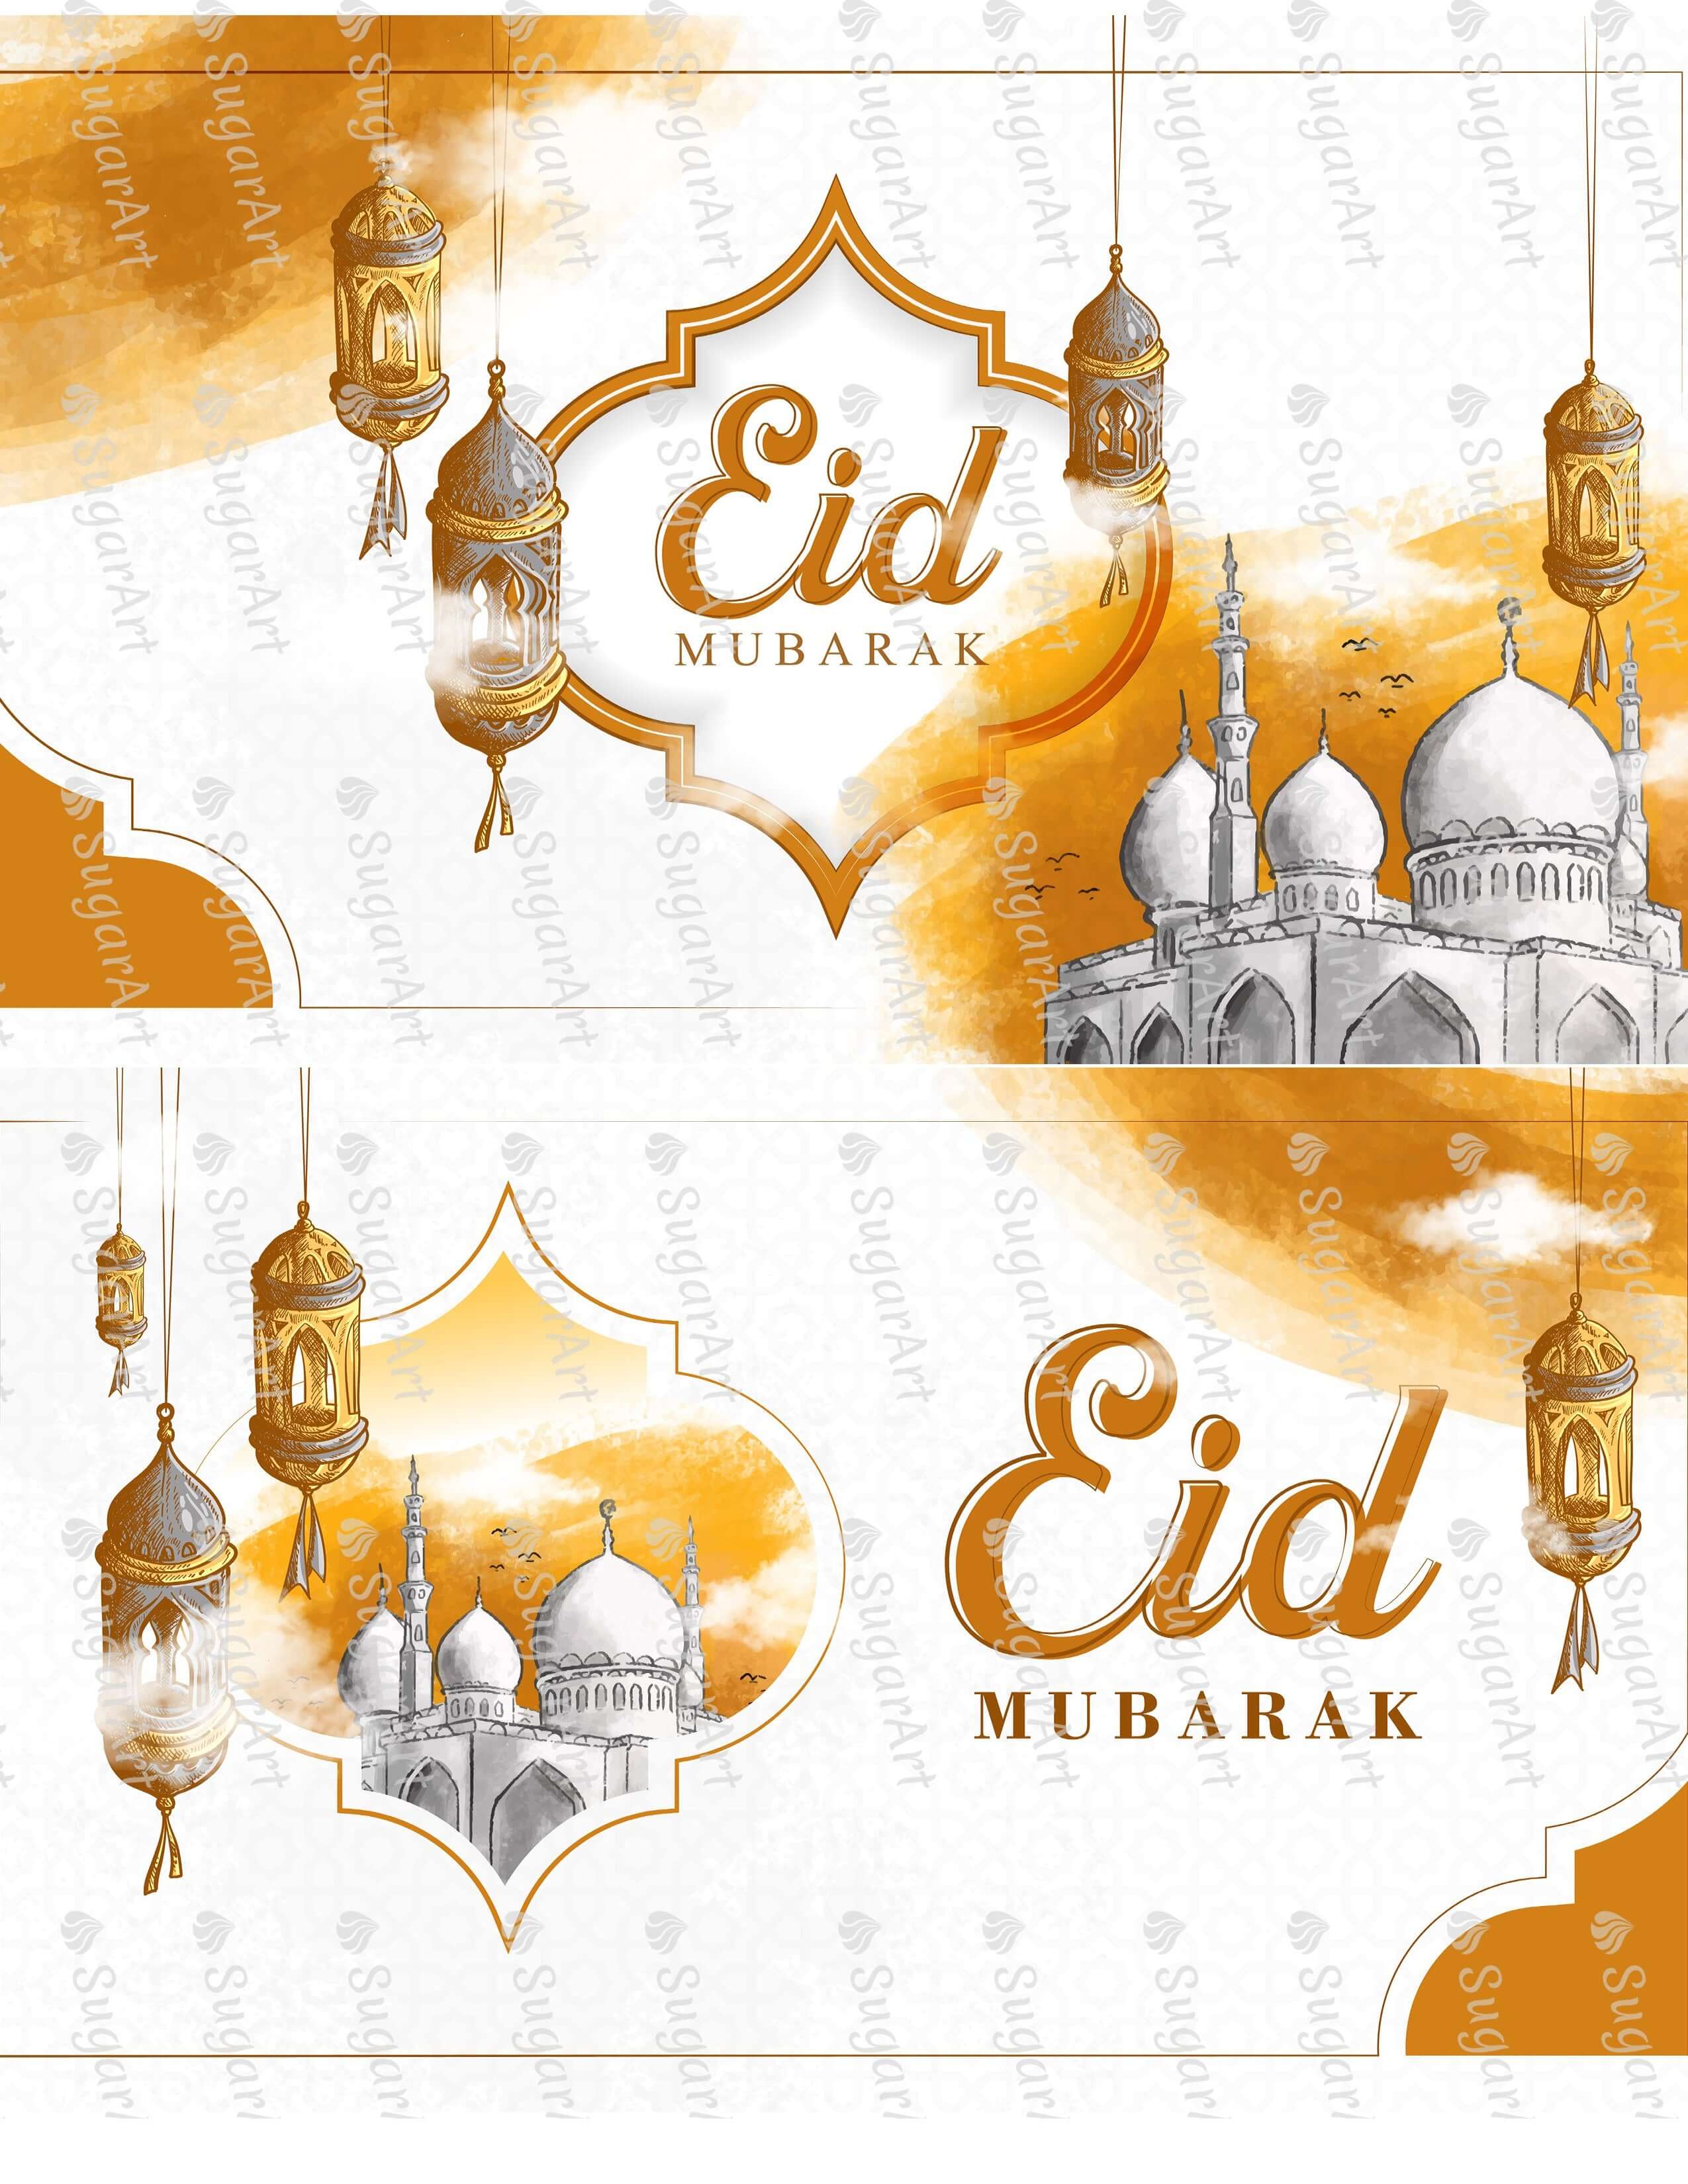 Two Eid Mubarak Illustrations - Icing - ISA228.